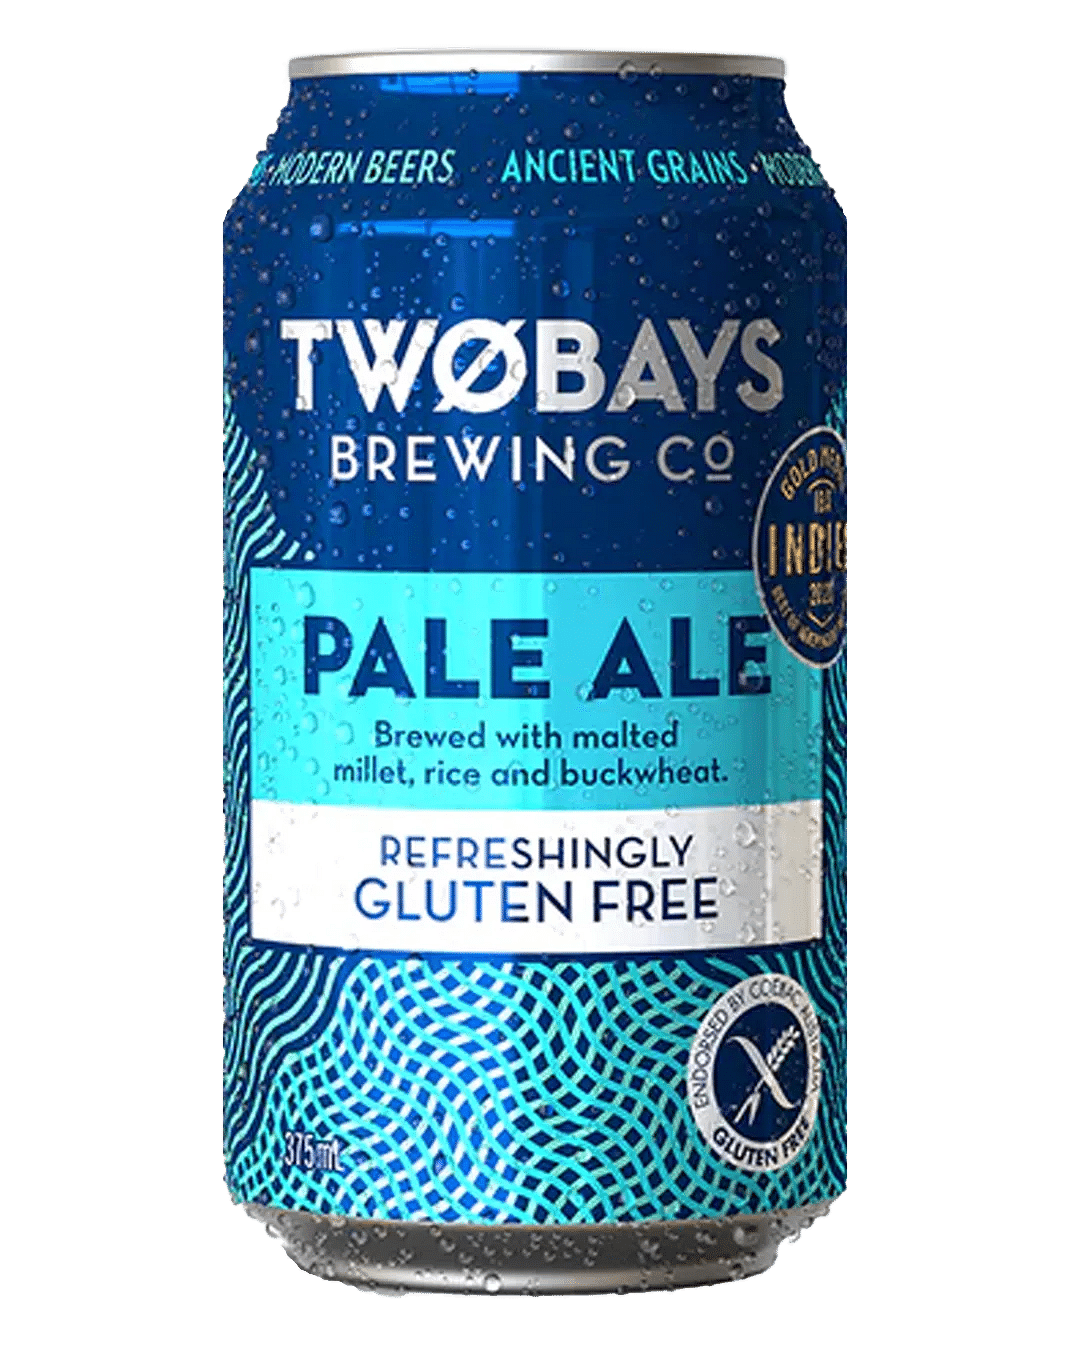 Two Bays Gluten Free Pale Ale